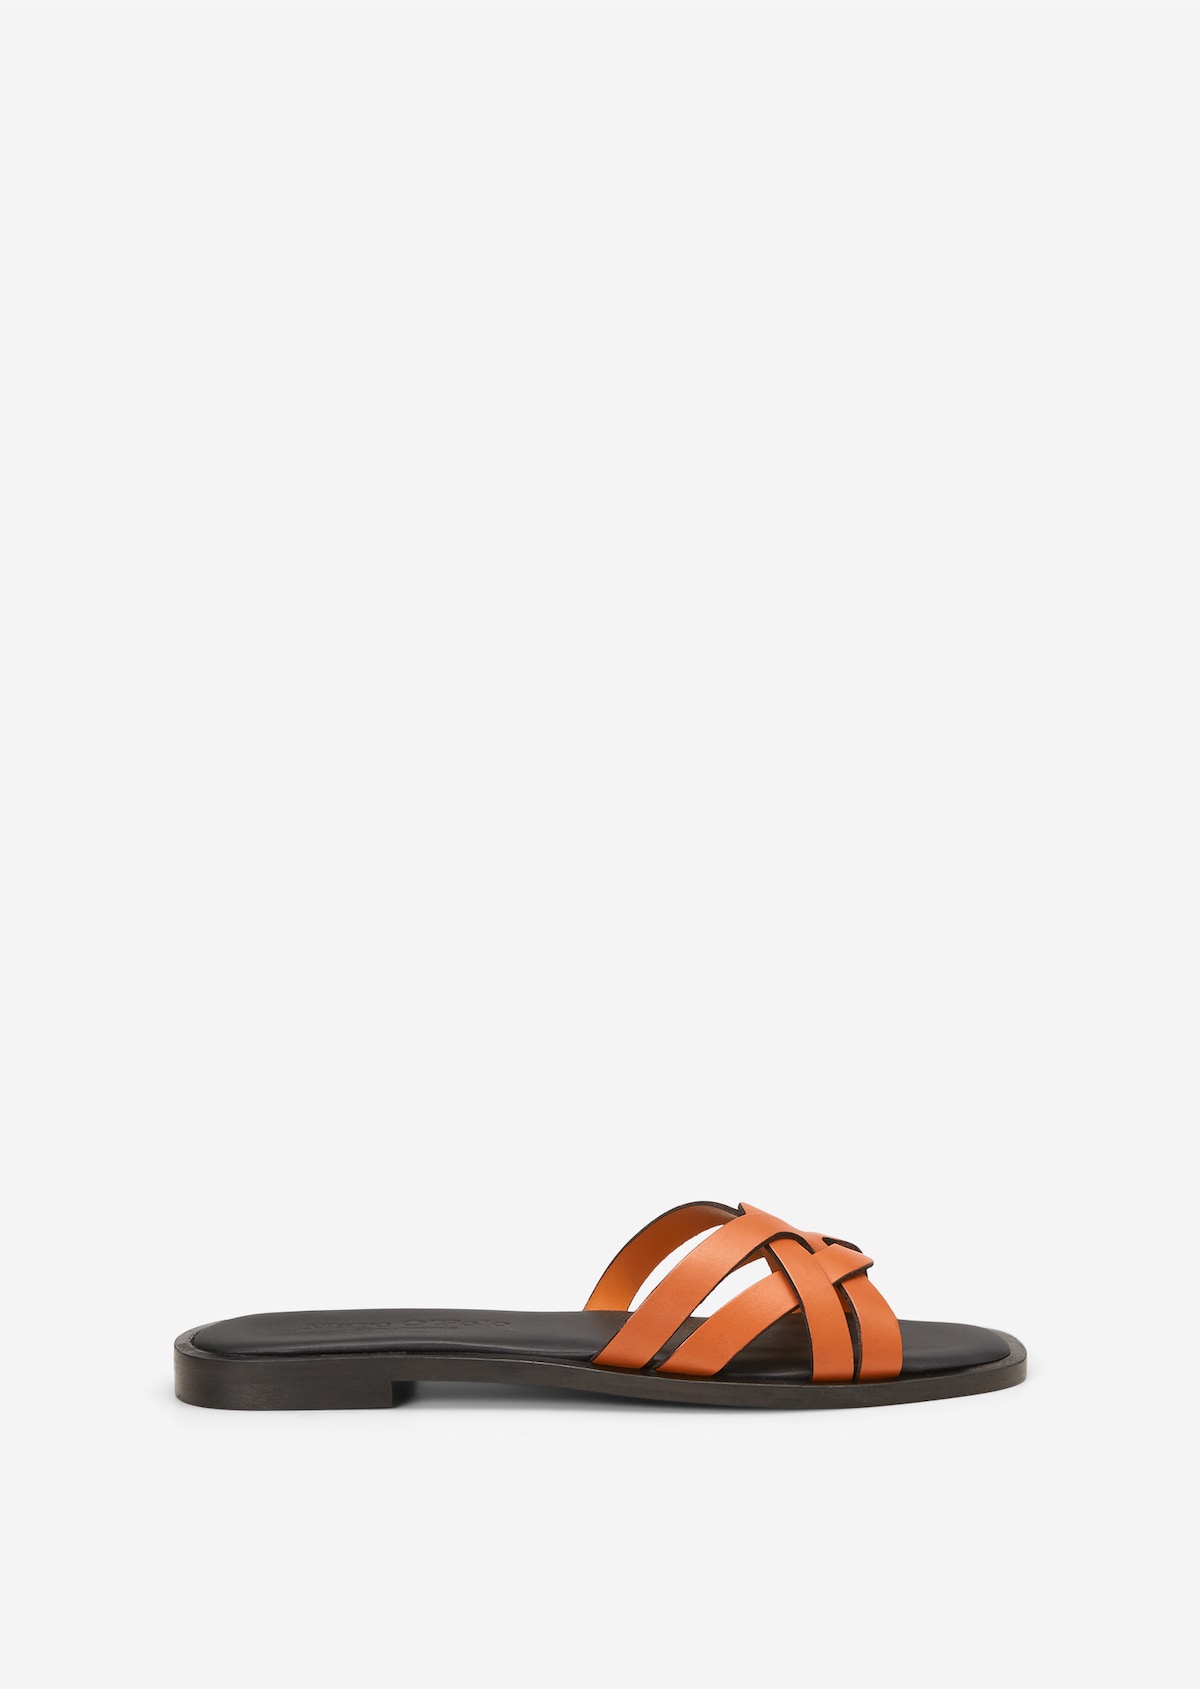 Mules in braided design - orange | Sandals | MARC O’POLO